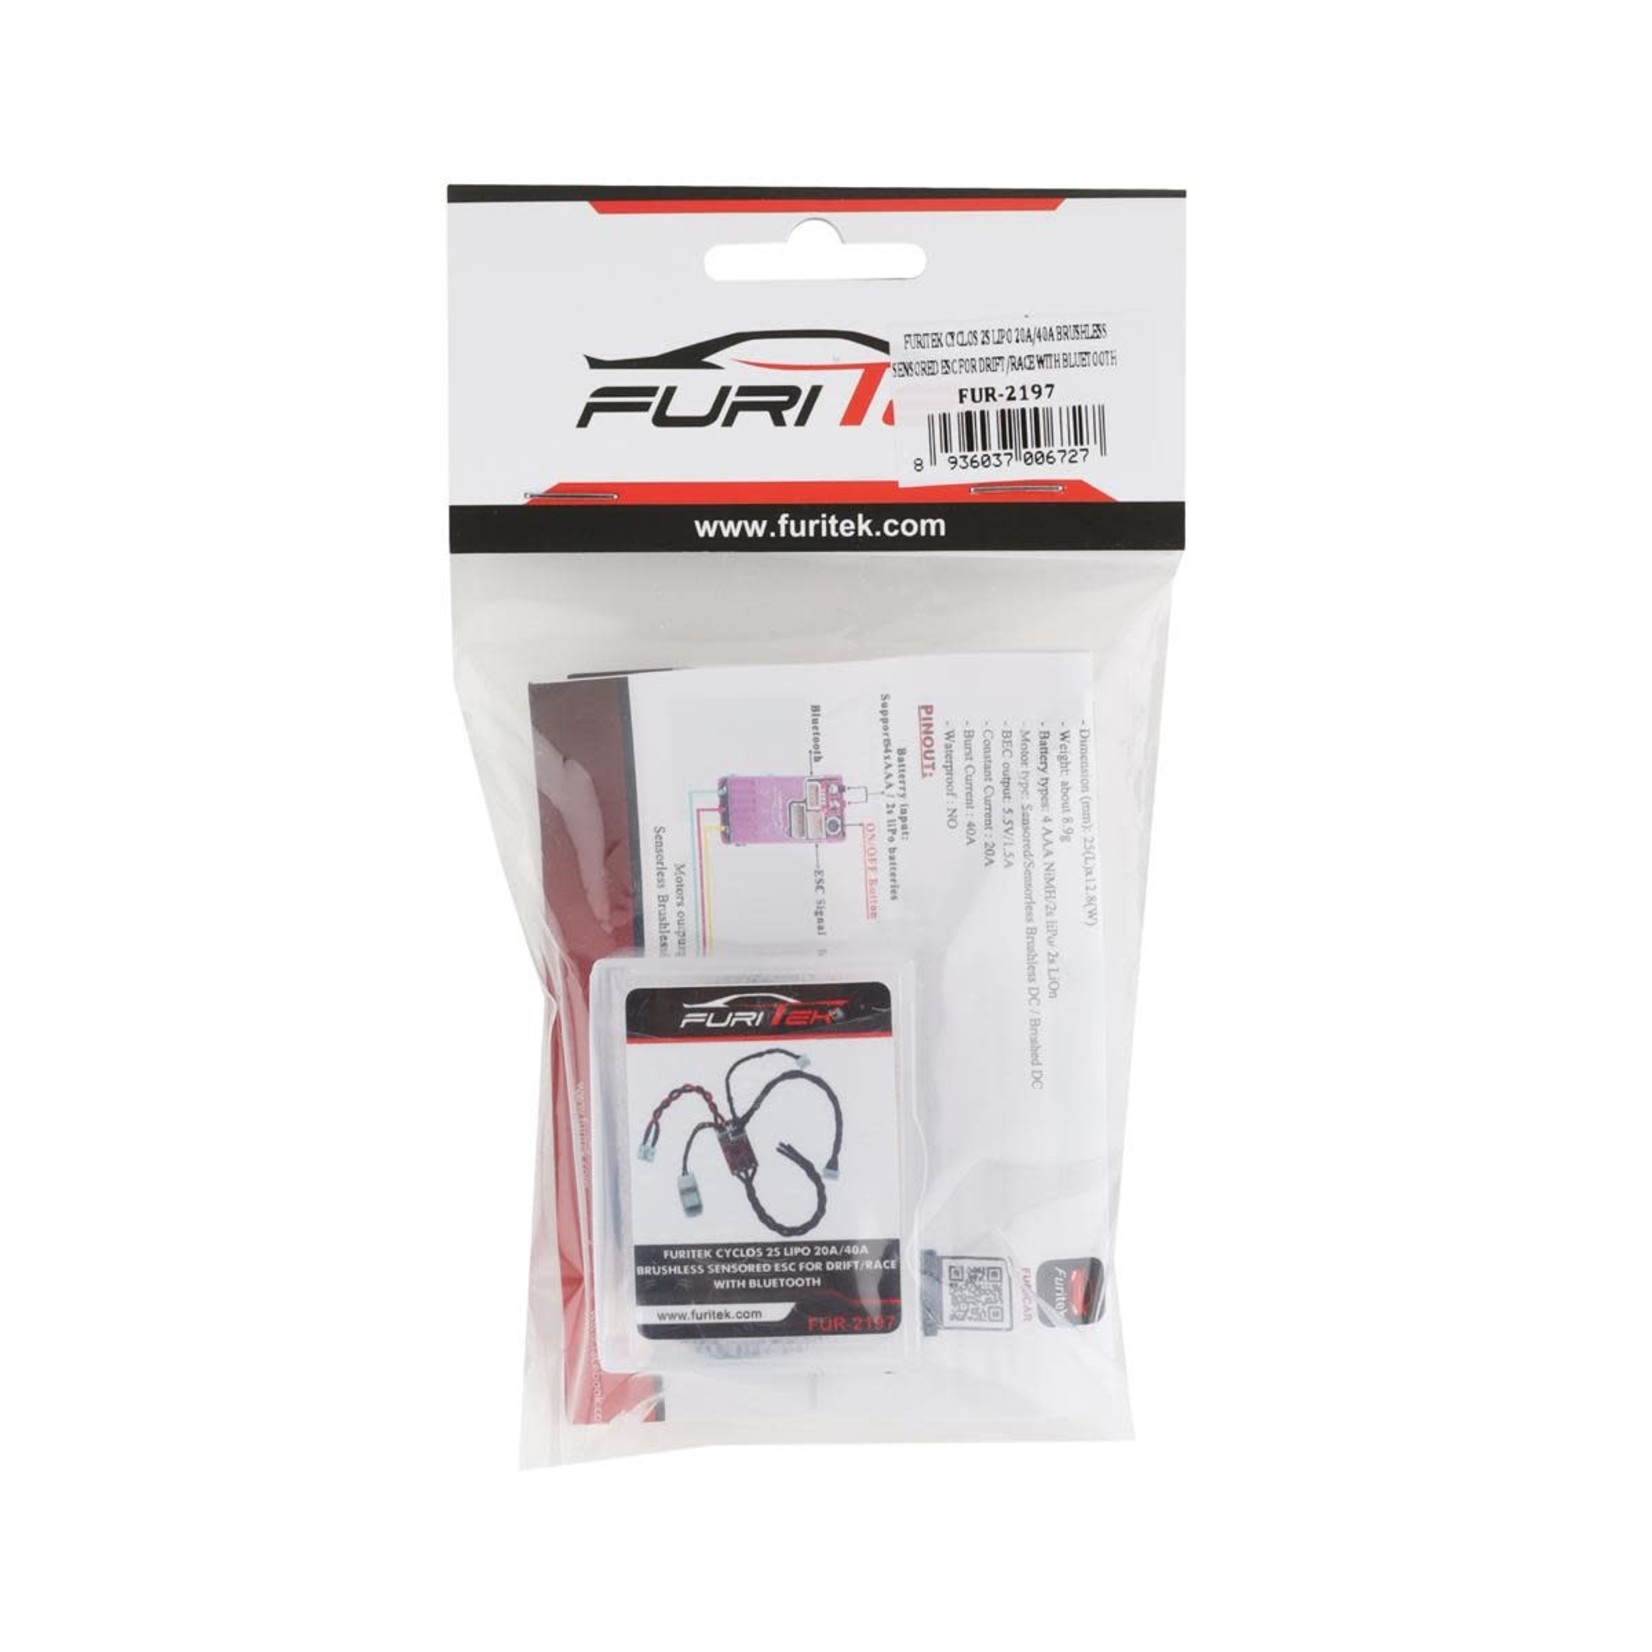 Furitek Furitek Cyclos 20A Sensored Brushless ESC w/Bluetooth Module #FUR-2197